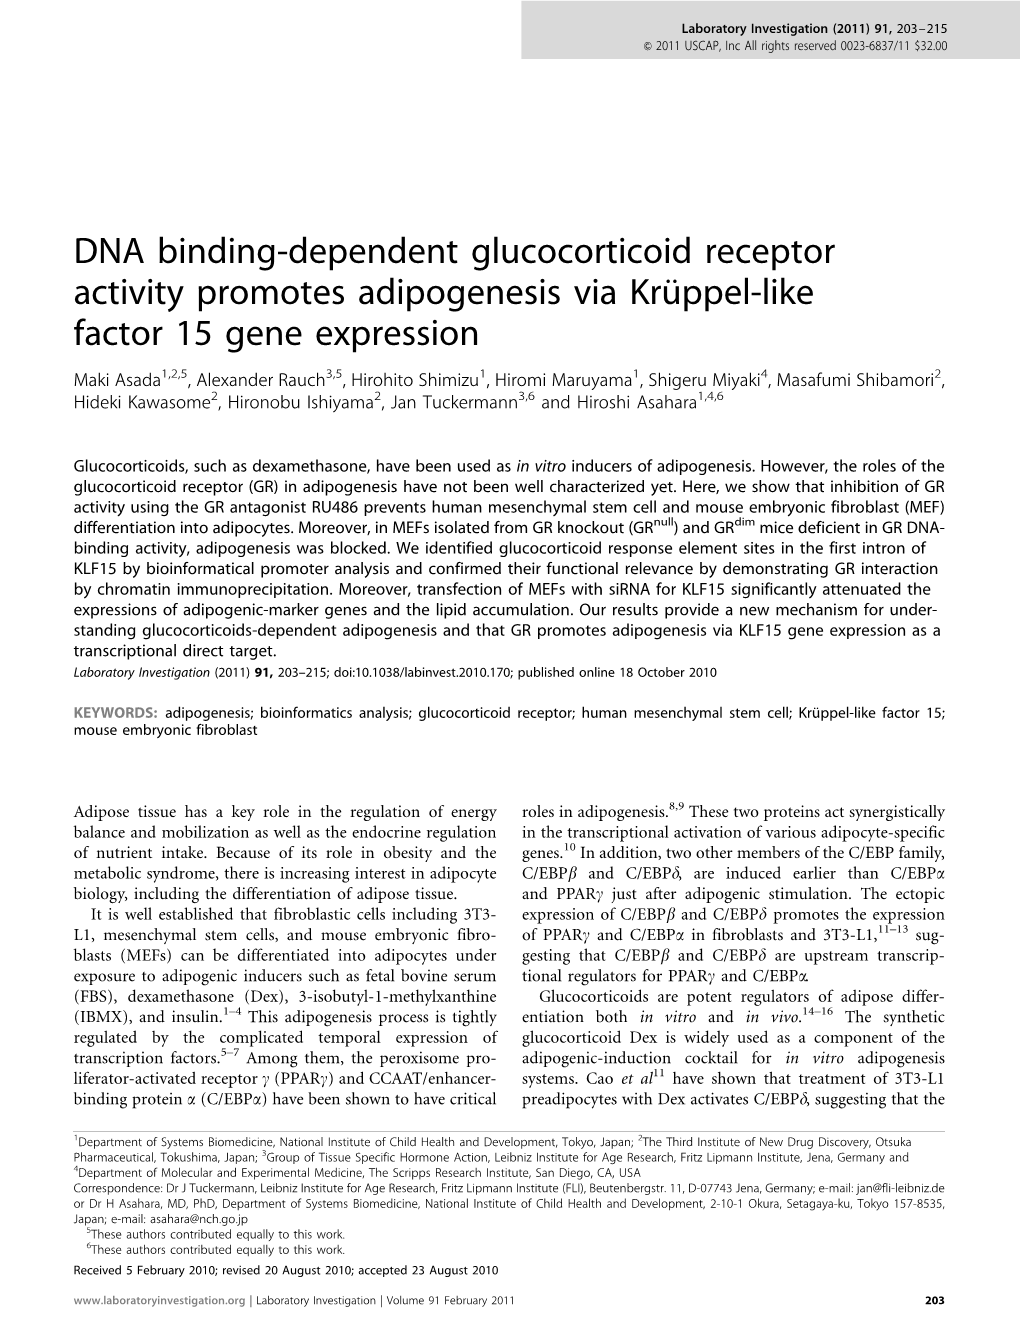 DNA Binding-Dependent Glucocorticoid Receptor Activity